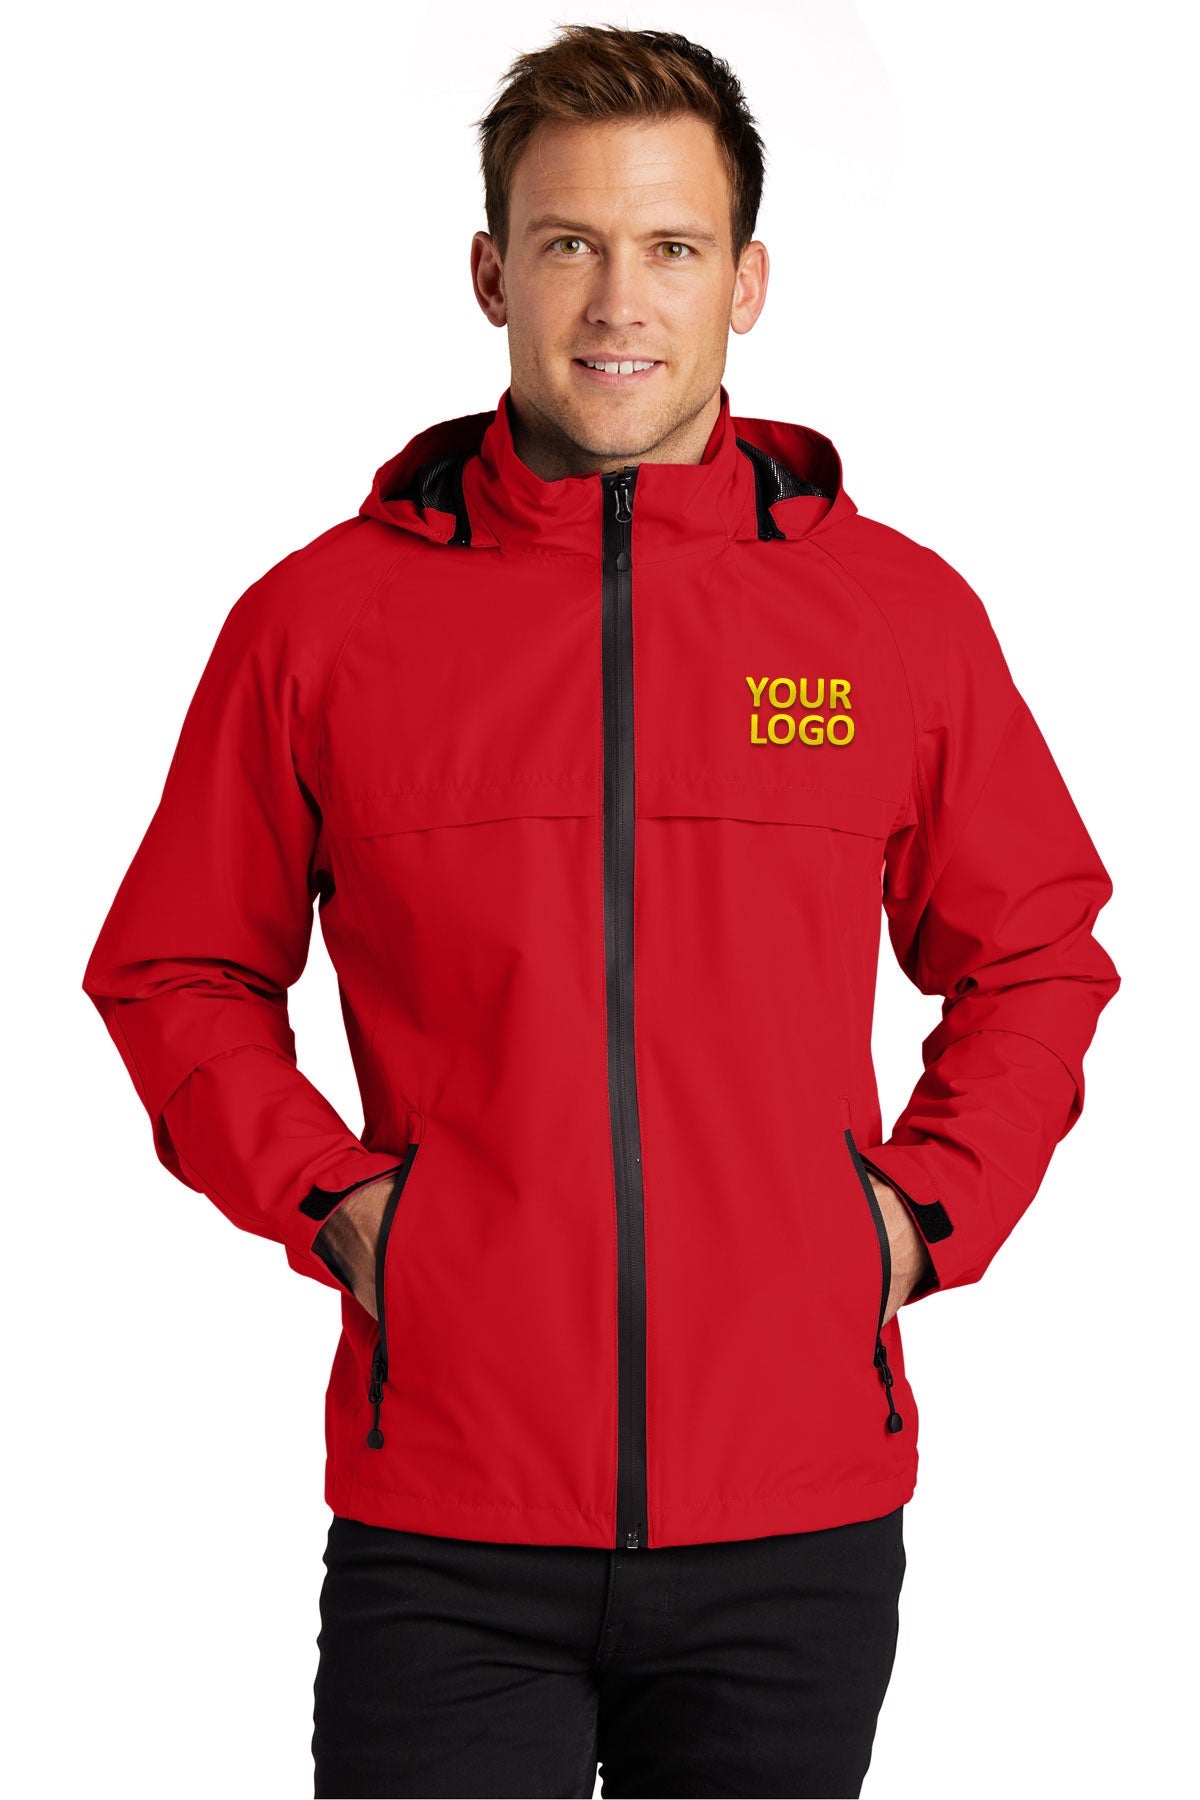 Port Authority Deep Red J333 company logo jackets